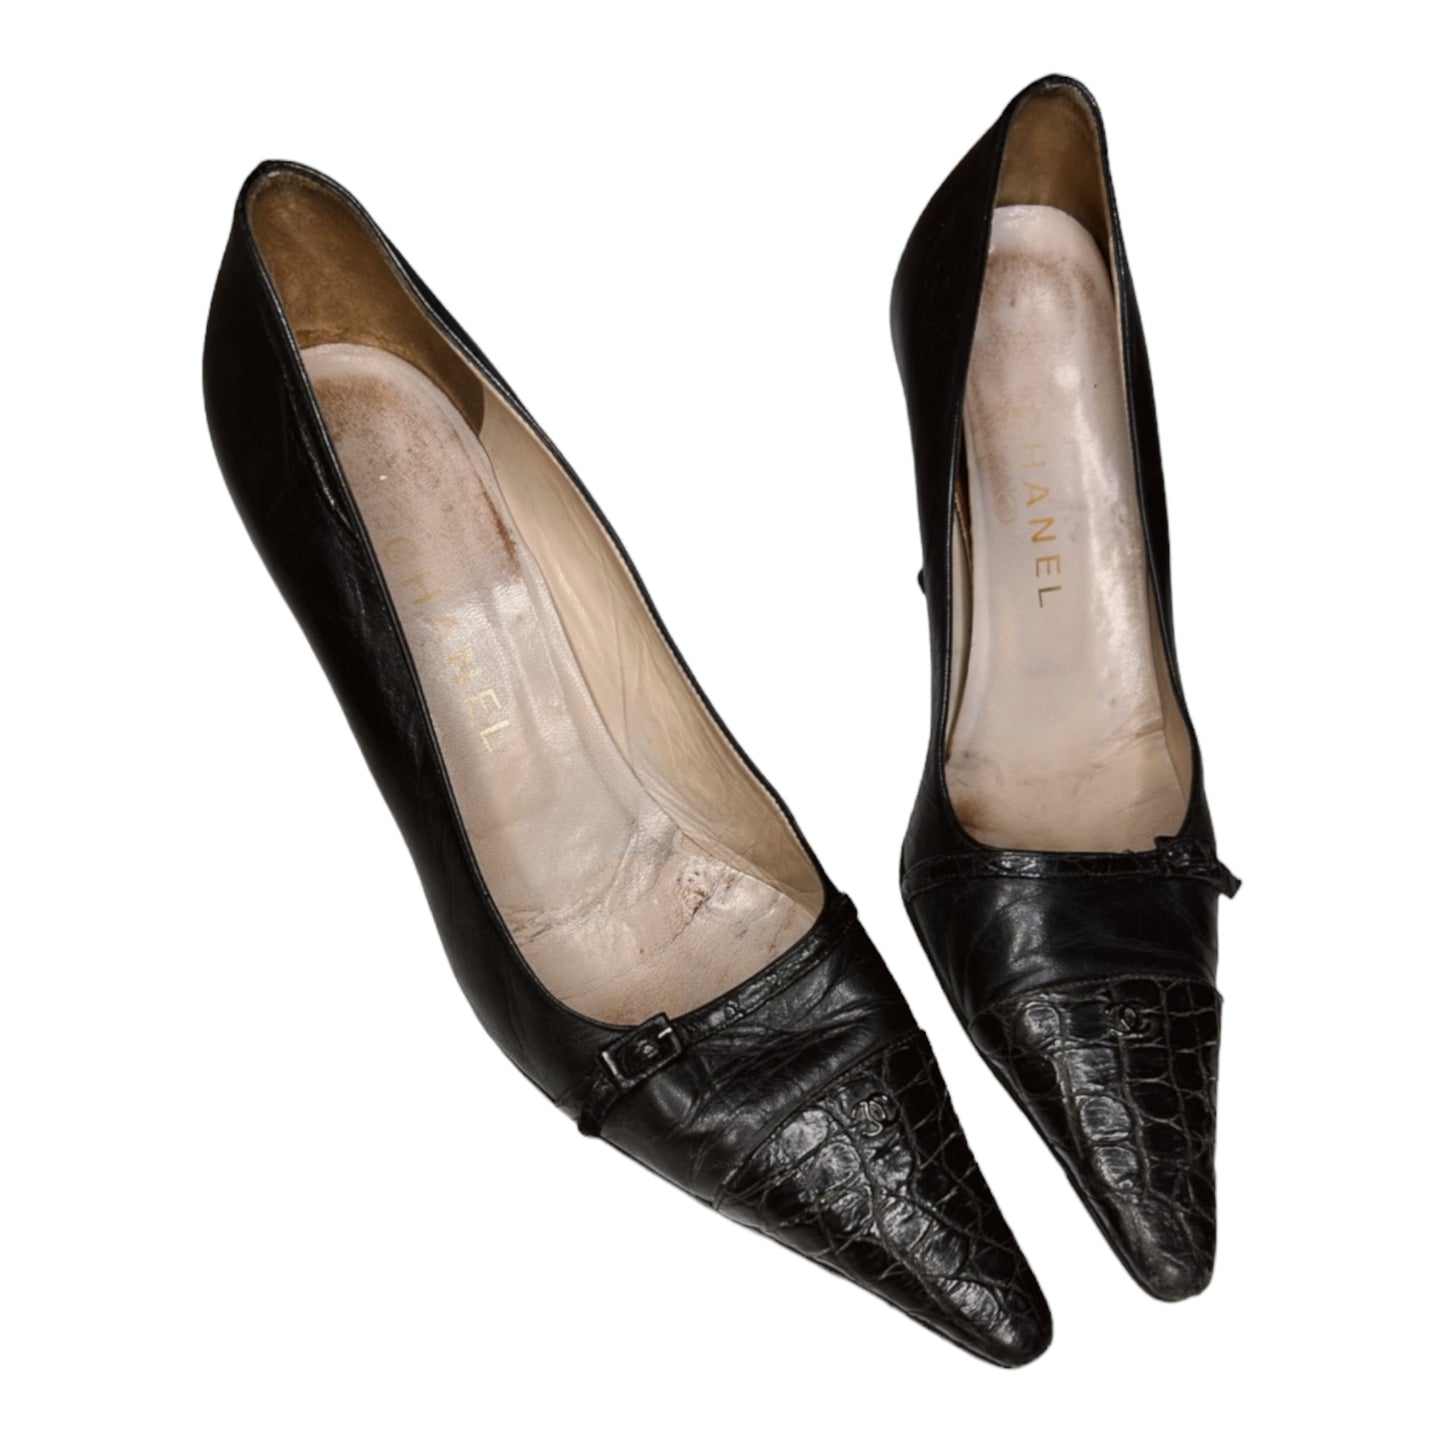 Vintage Chanel black leather kitten heels